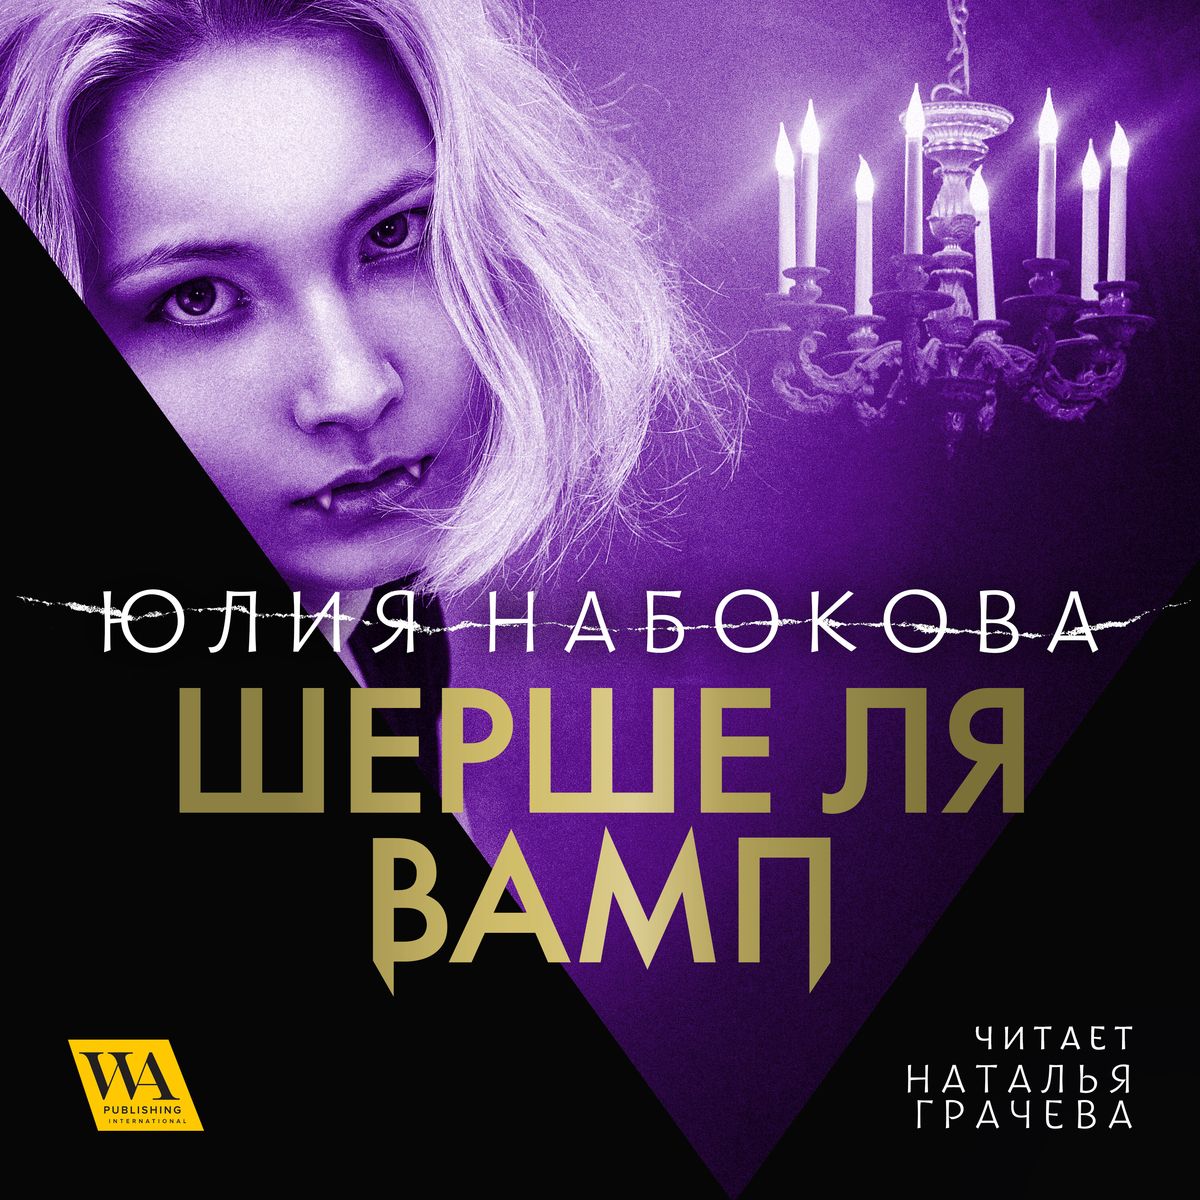 Купить Шерше ля вамп, Юлия Набокова